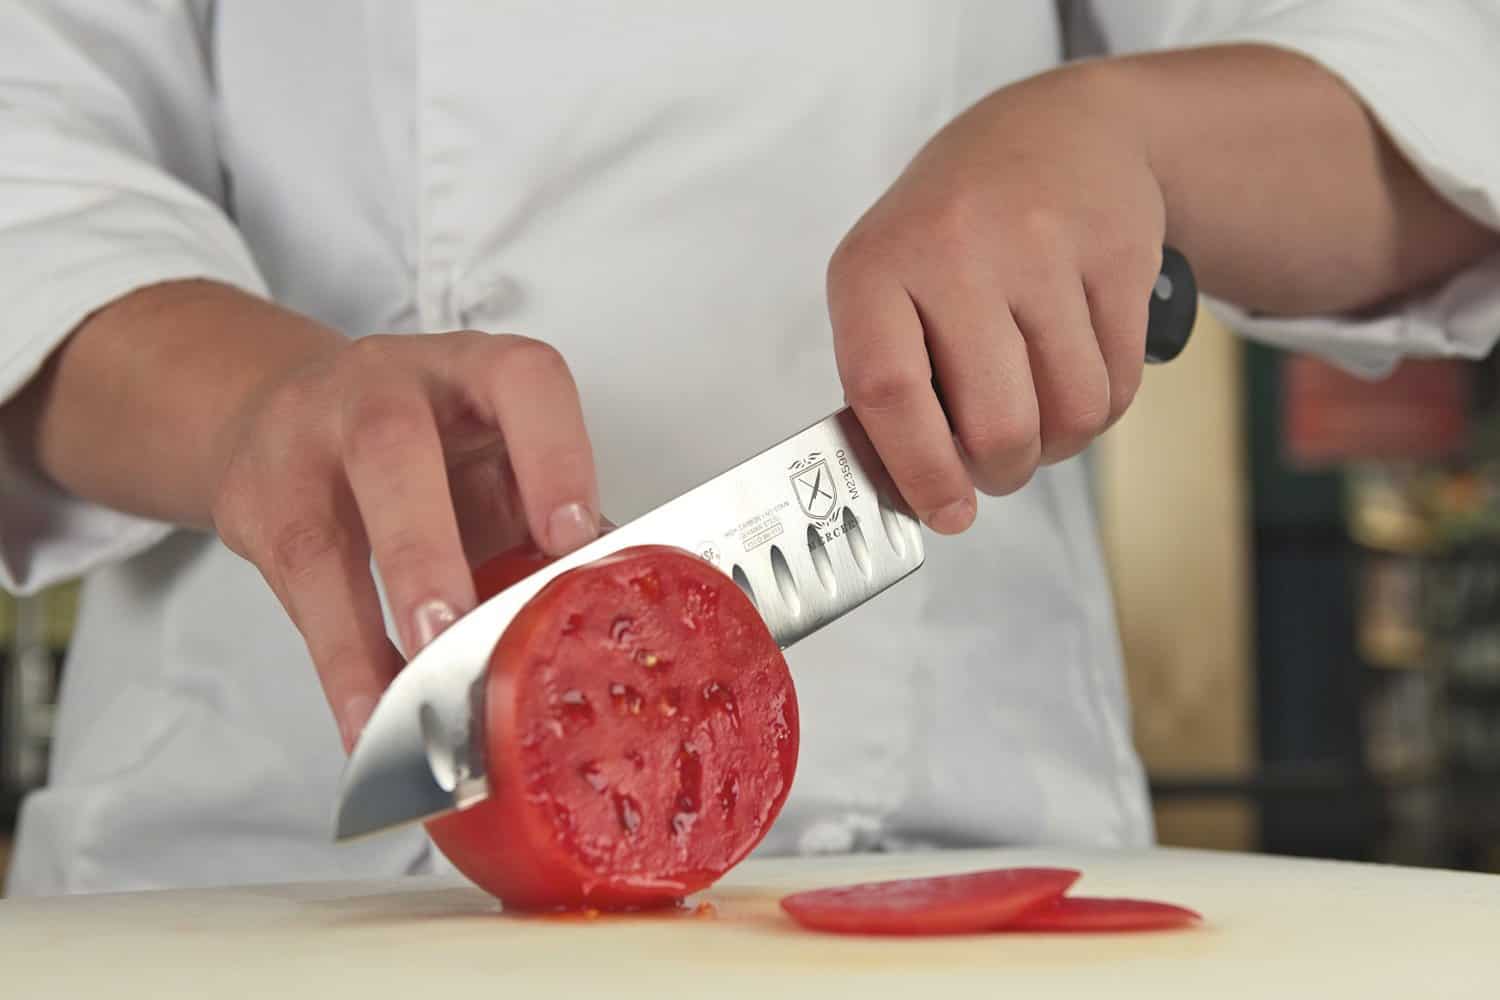 Chef using a Japanese santoku knife